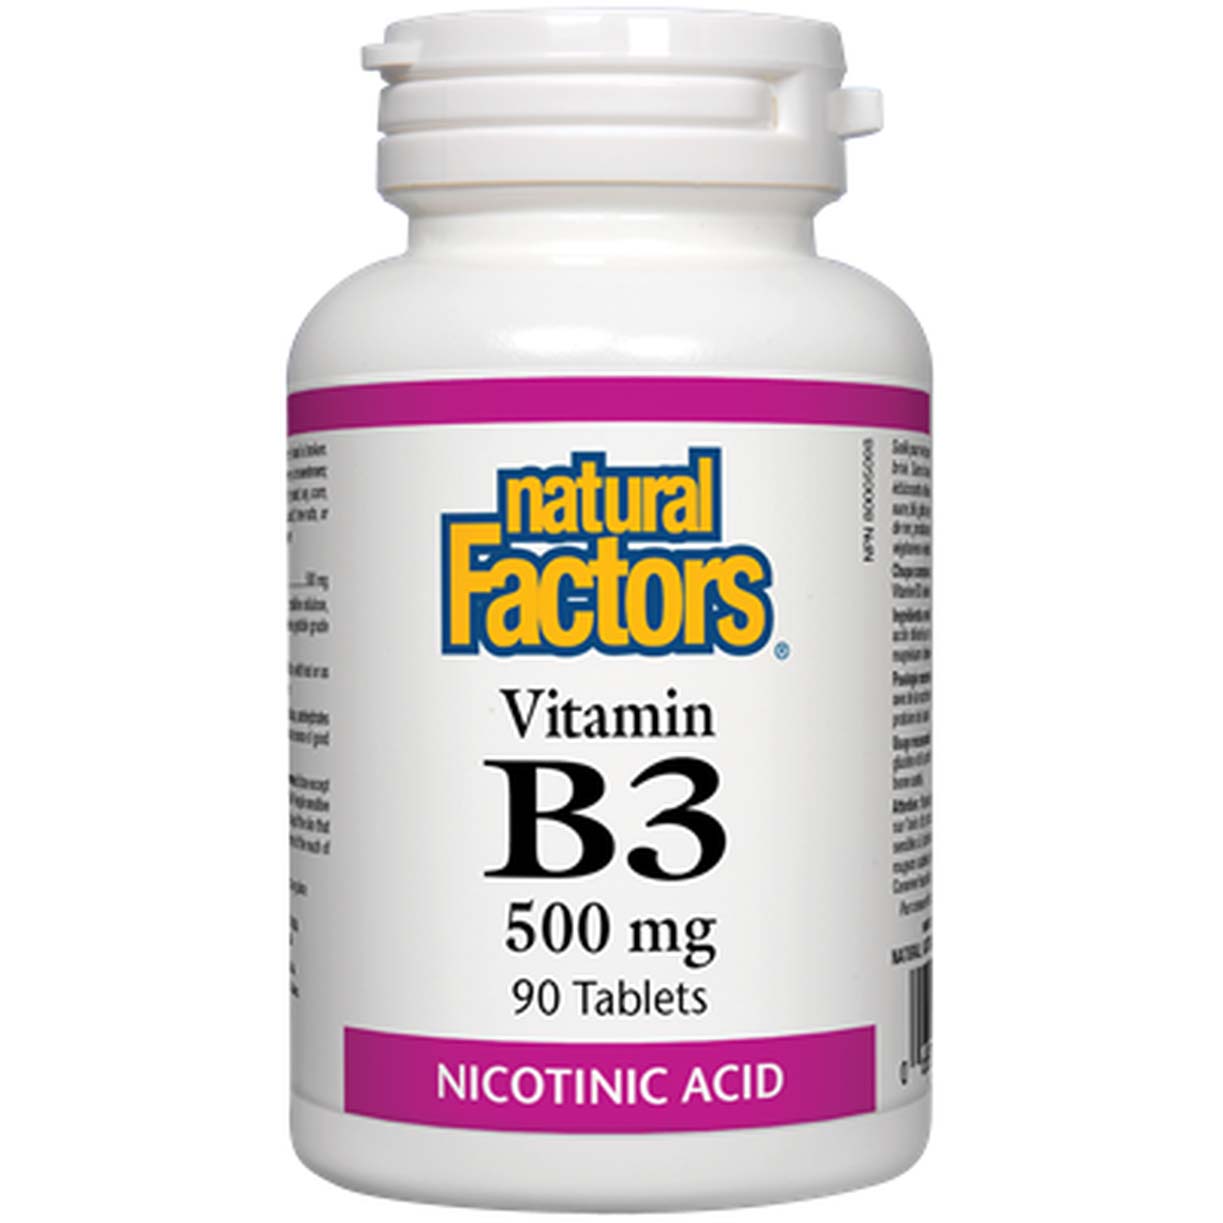 Natural Factors Vitamin B3, 500 mg, 90 Tablets